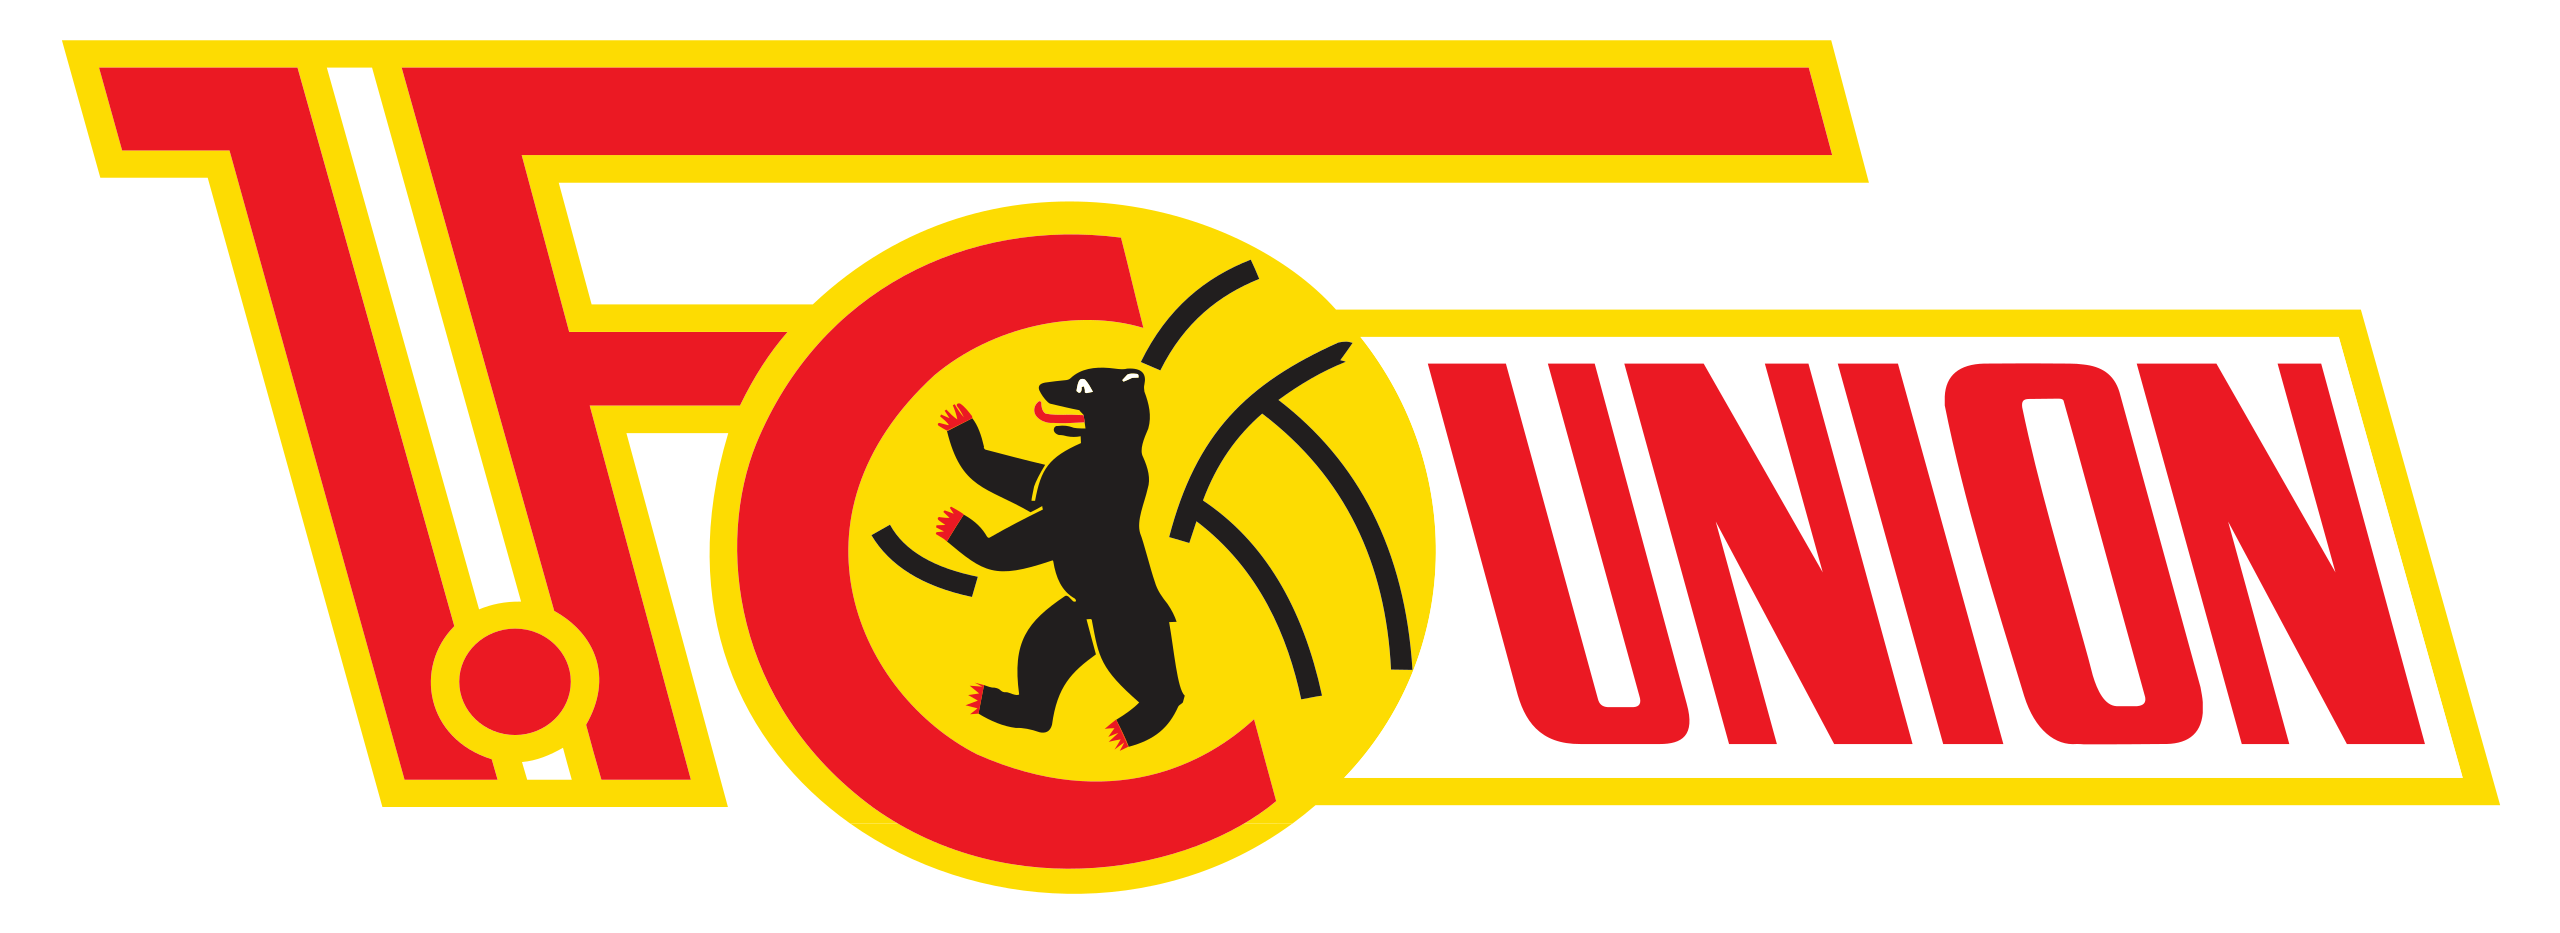 1 FC Union Berlin Logo